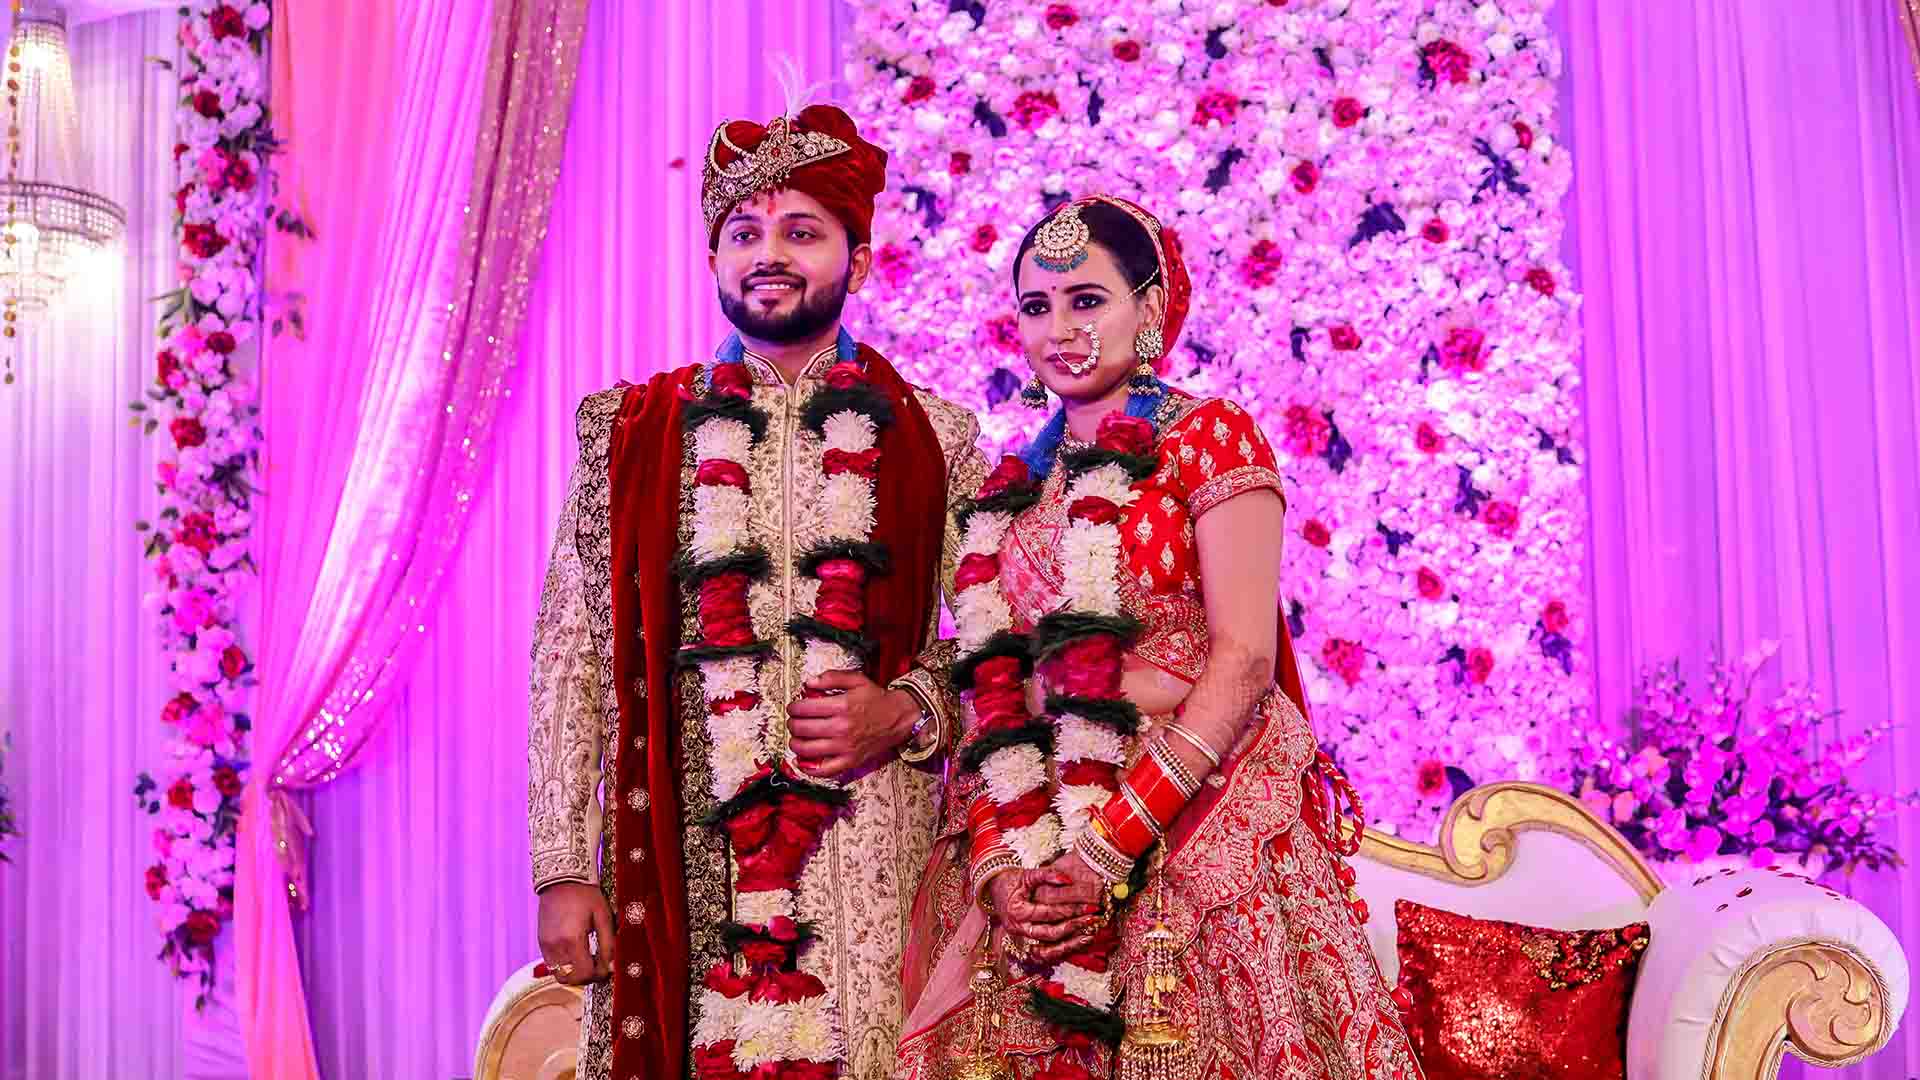 Image Of Wedding-Photography-Studio-In-Varanasi-India-31C